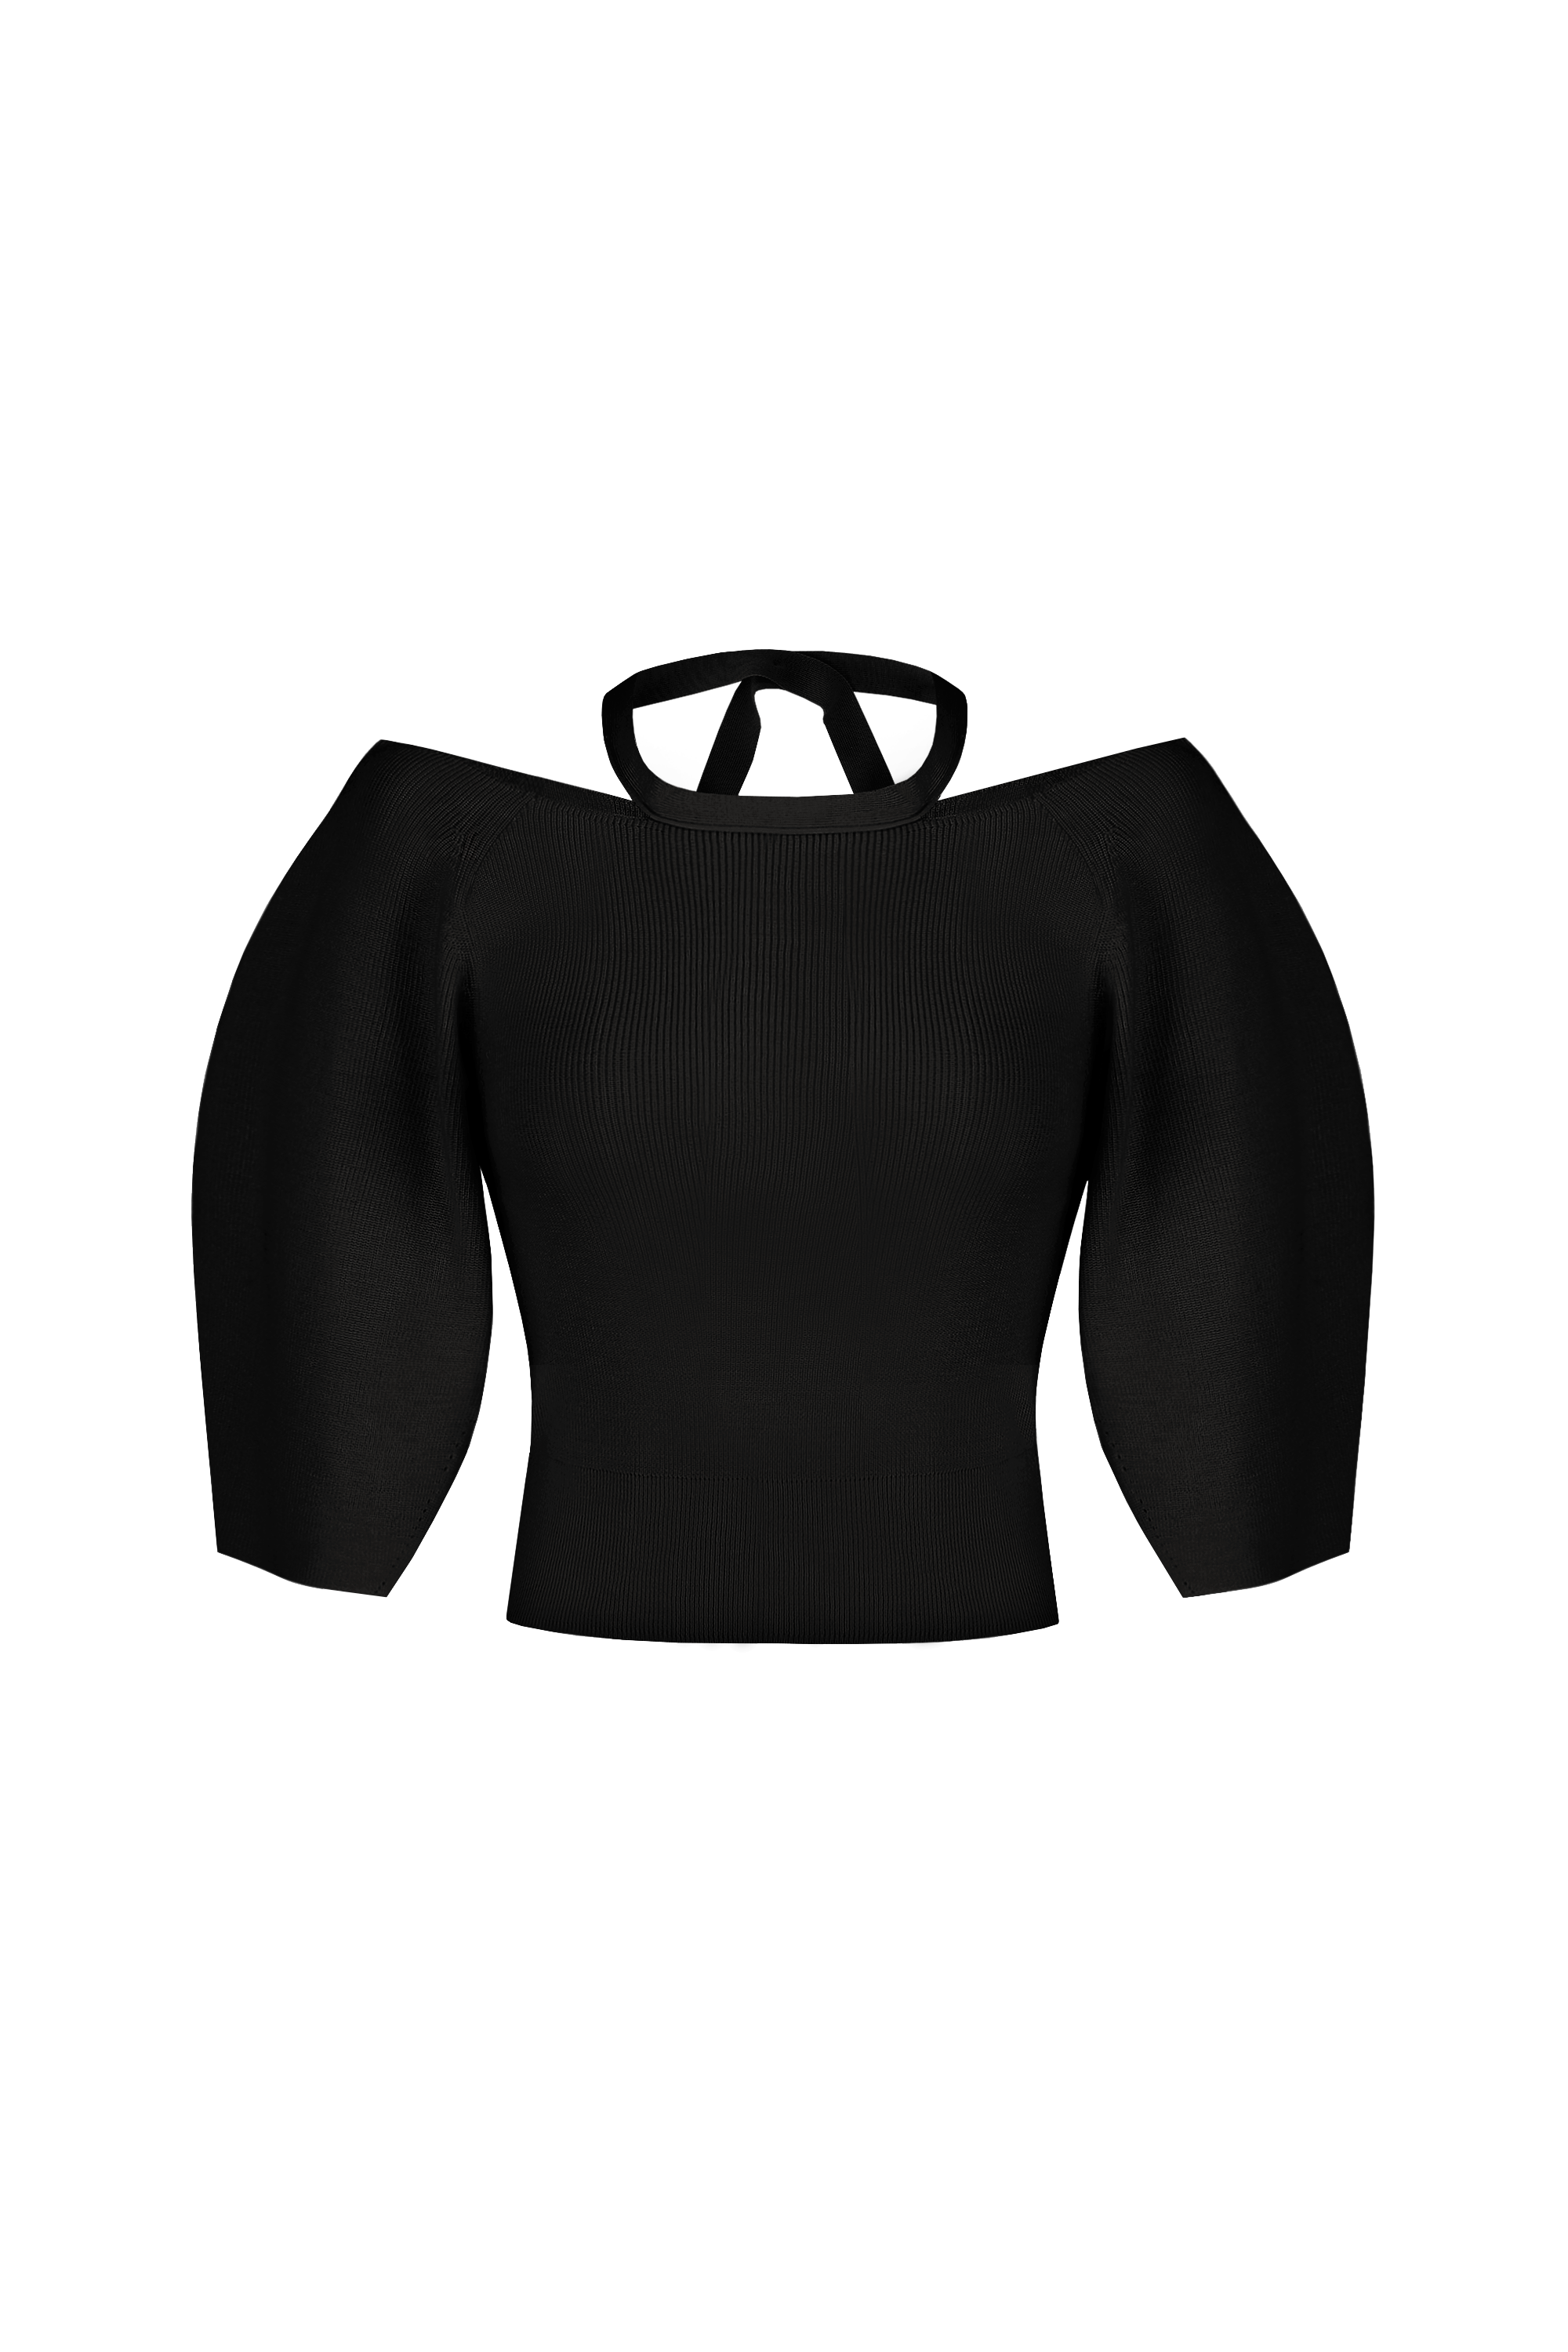 [Resort] GOYIR Innes modal knitwear BLACK color